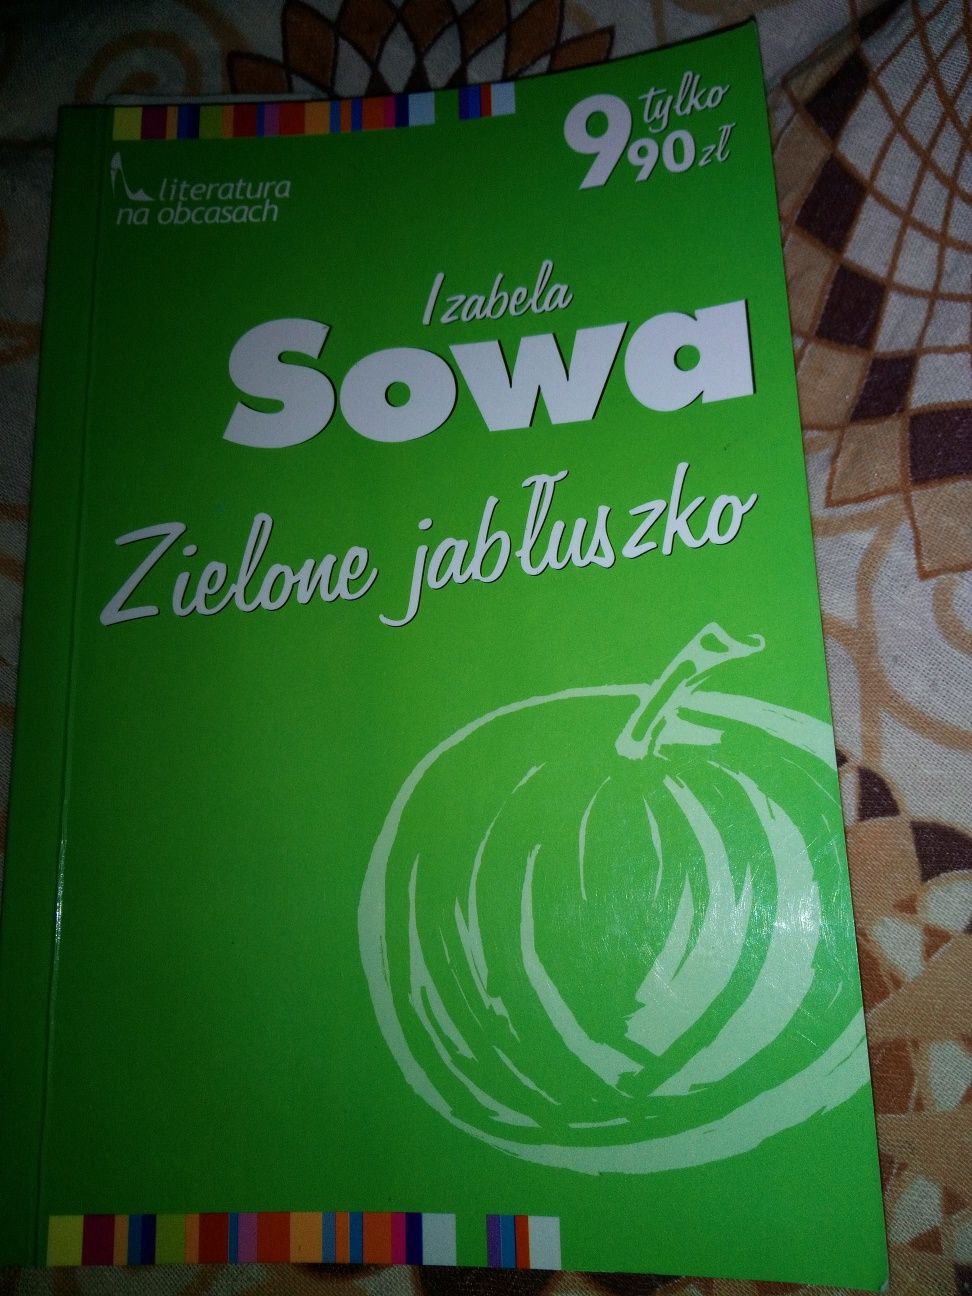 22. ,, Zielone jabłuszko" Izabela Sowa